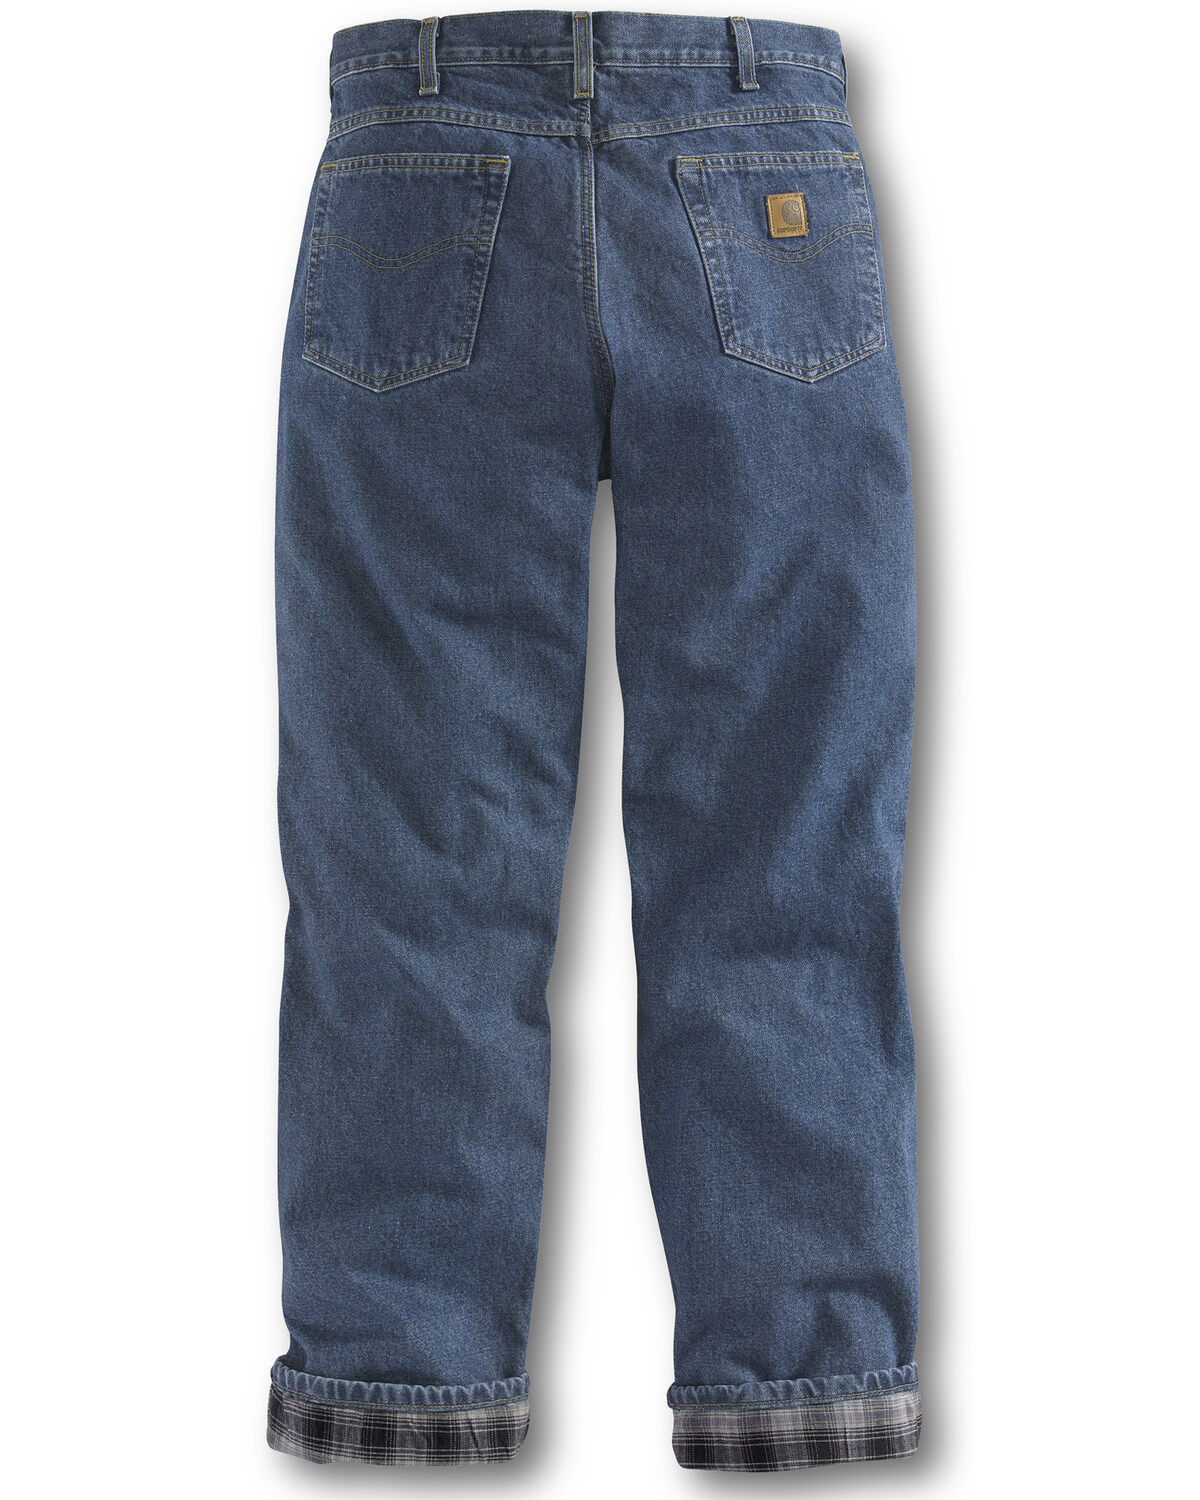 carhartt jeans sale